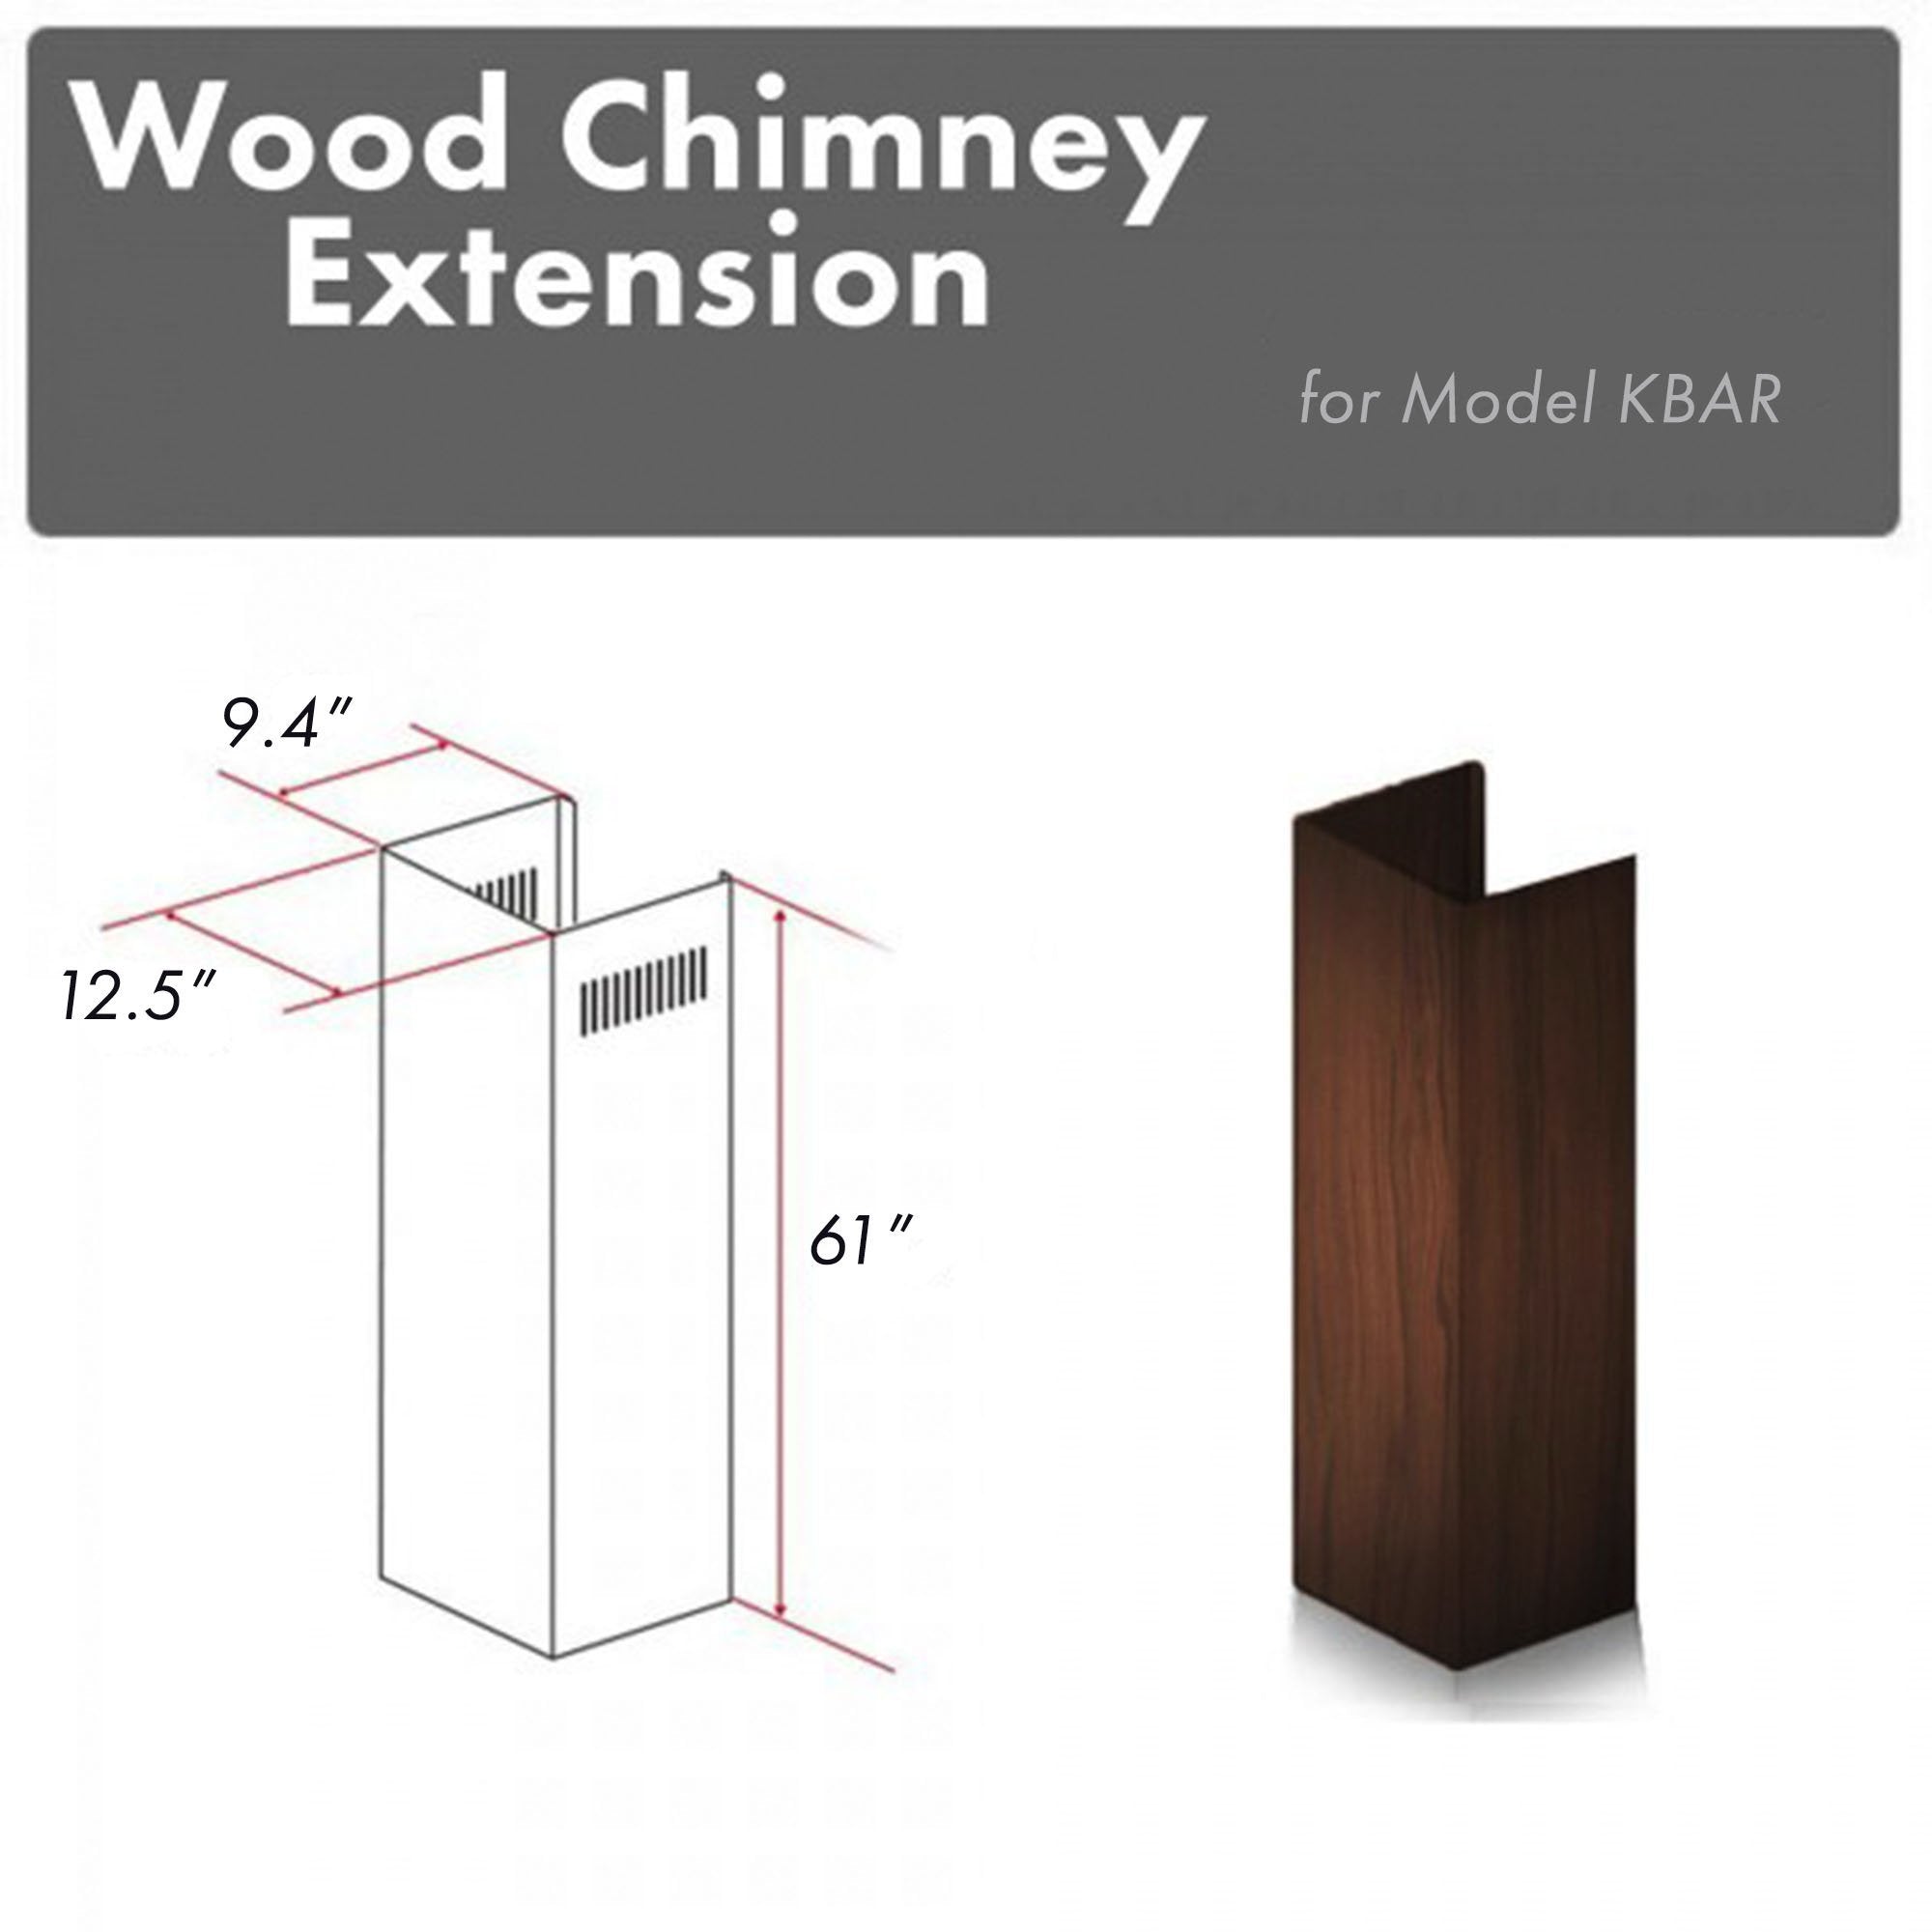 ZLINE 61" Wooden Chimney Extension for Ceilings up to 12.5 ft. (KBAR-E) - Rustic Kitchen & Bath - Range Hood Accessories - ZLINE Kitchen and Bath